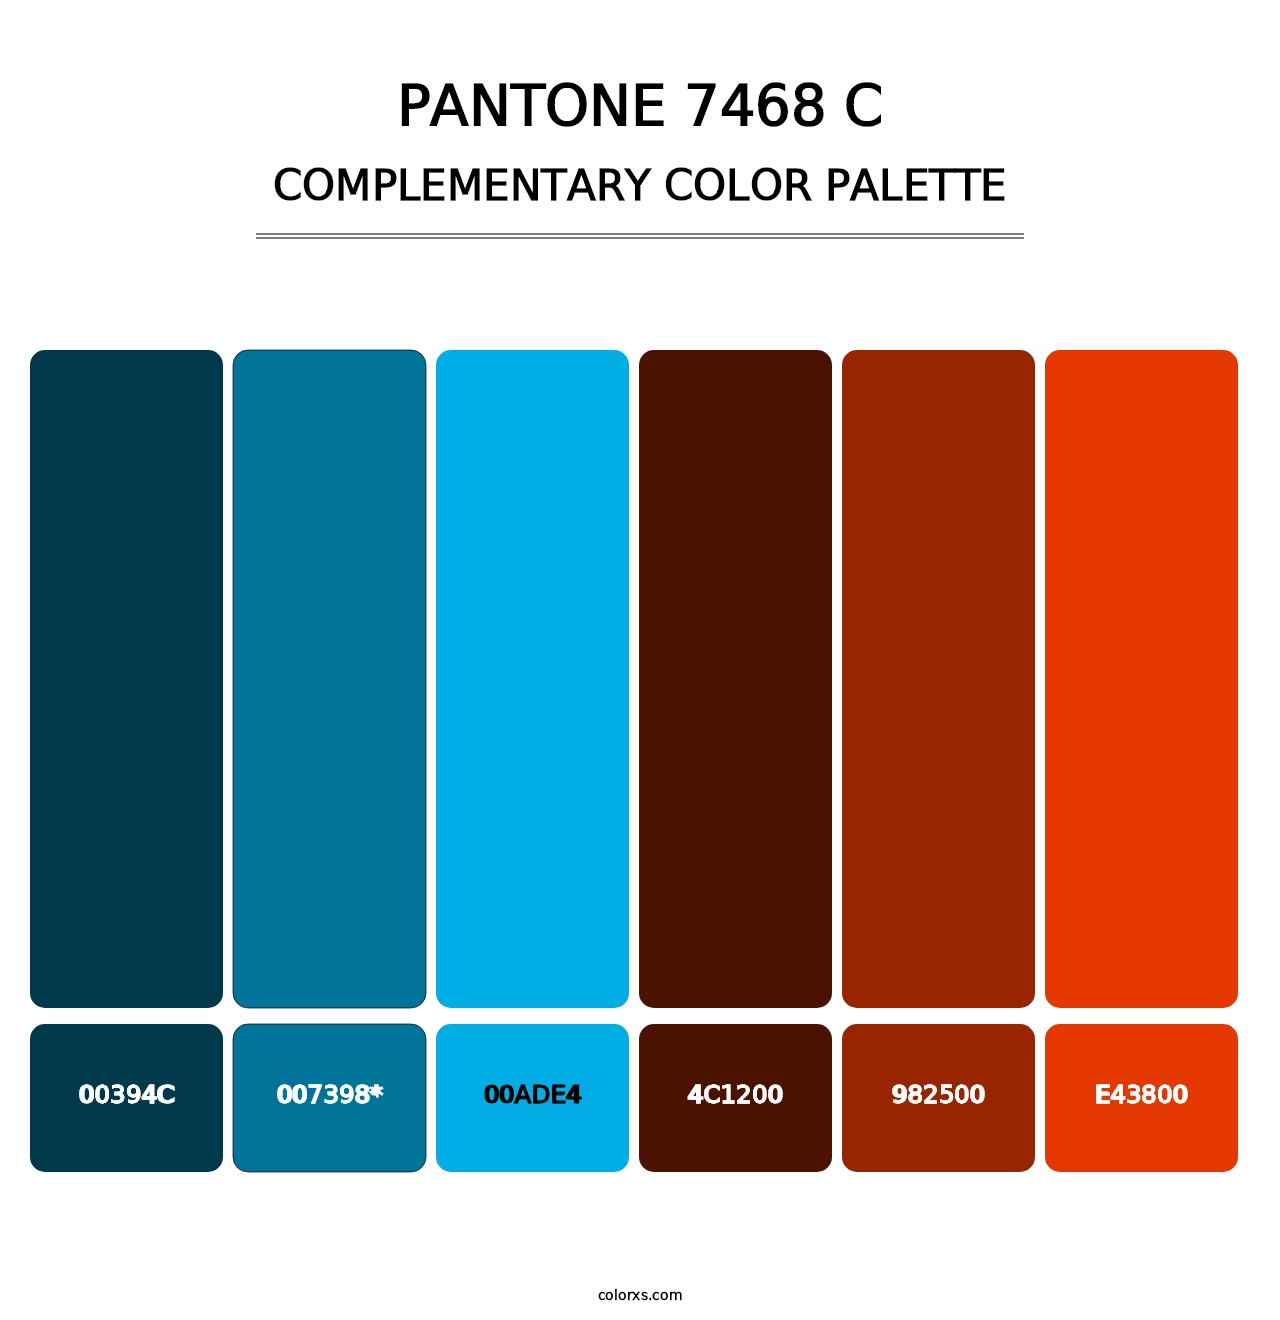 PANTONE 7468 C - Complementary Color Palette